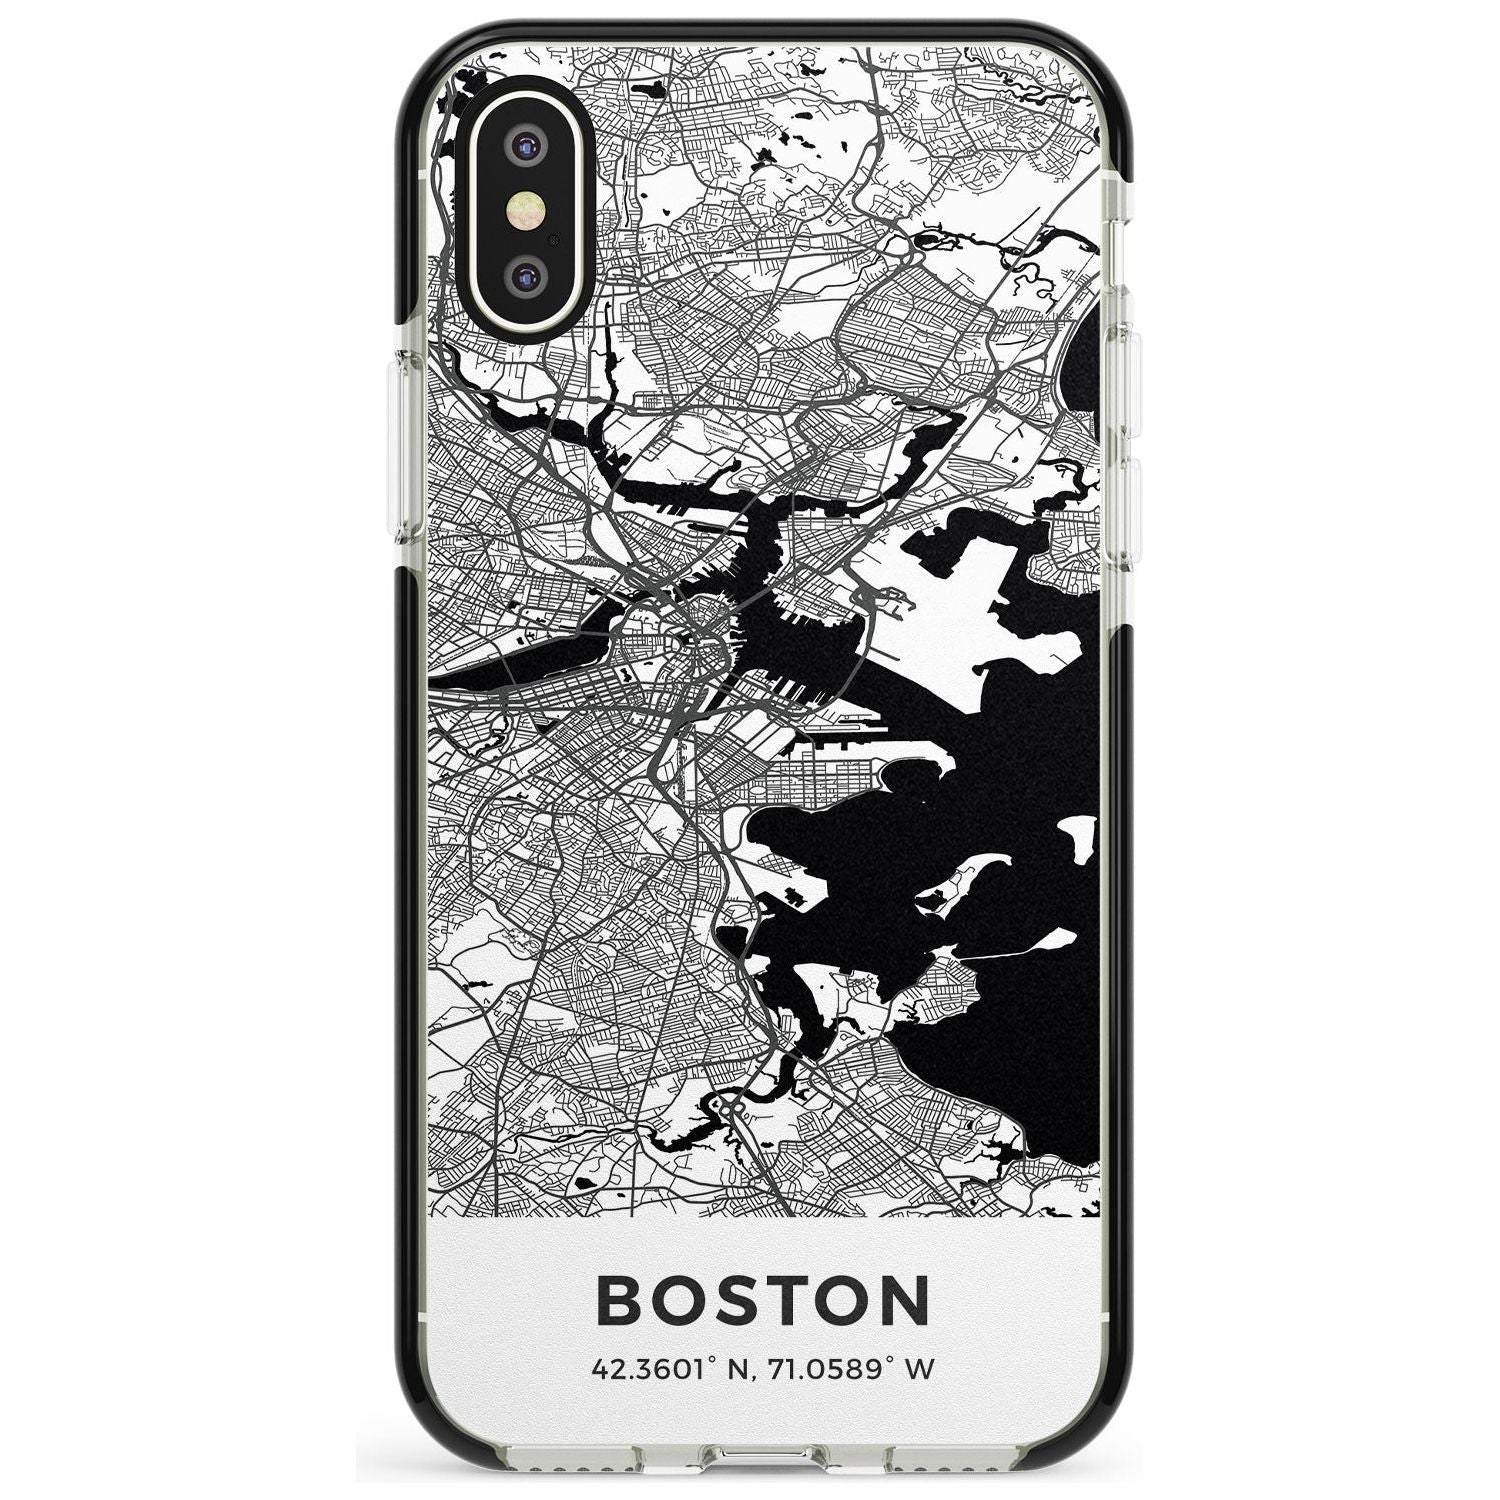 Map of Boston, Massachusetts Black Impact Phone Case for iPhone X XS Max XR